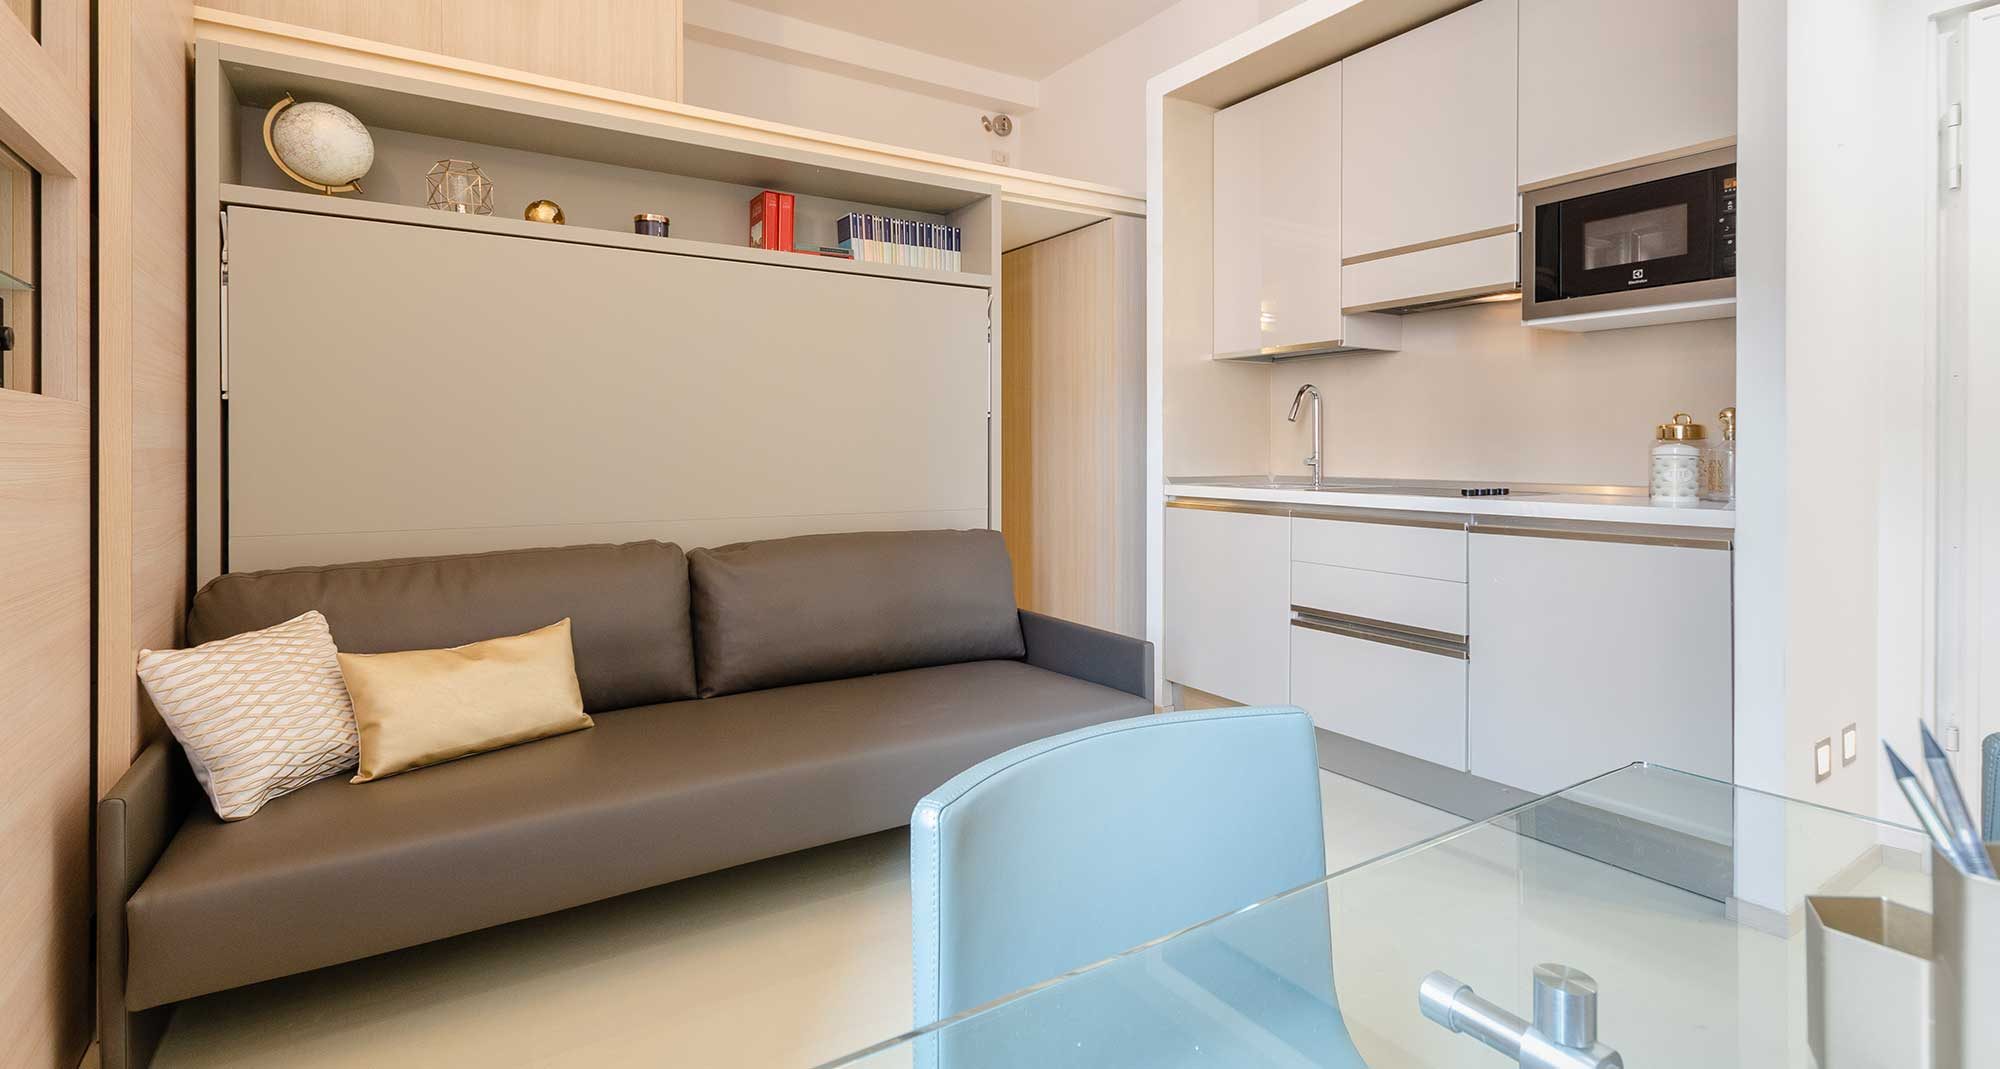 hi-spaces short rental apartment in italy